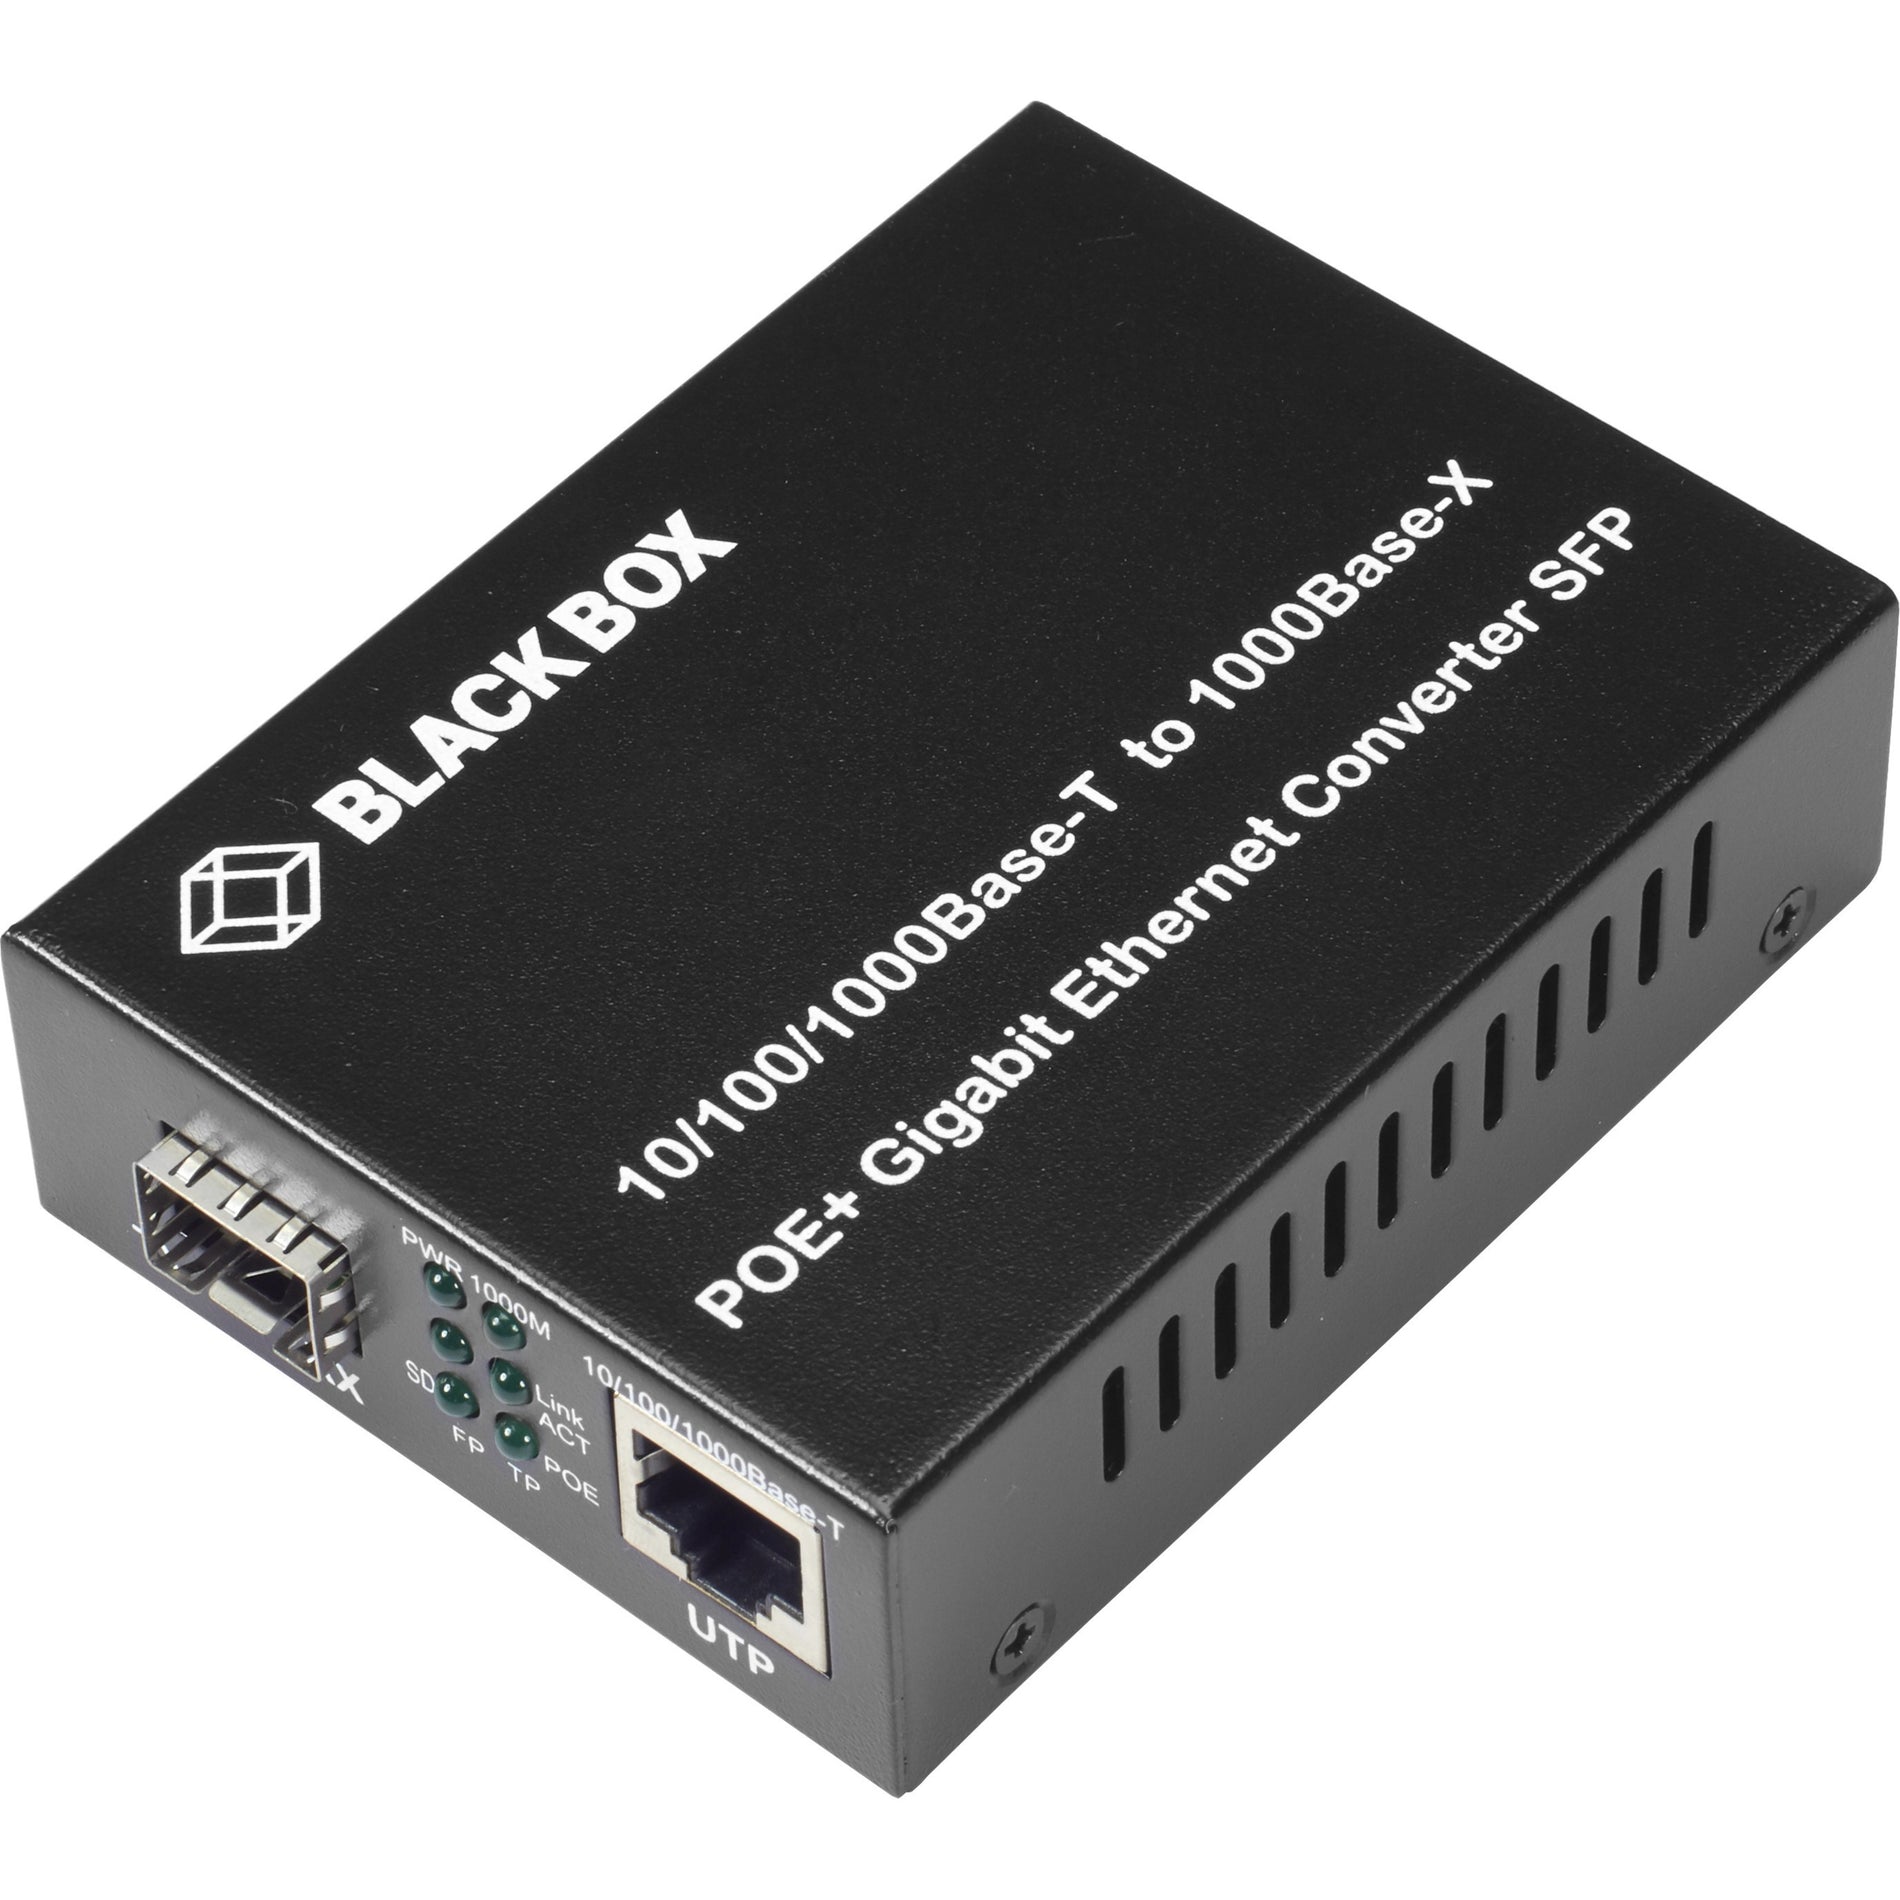 Black Box LGC215A-R2 Pure Networking Transceiver/Media Converter, 1-Port Gigabit Ethernet, Multi-mode/Single-mode Fiber Support